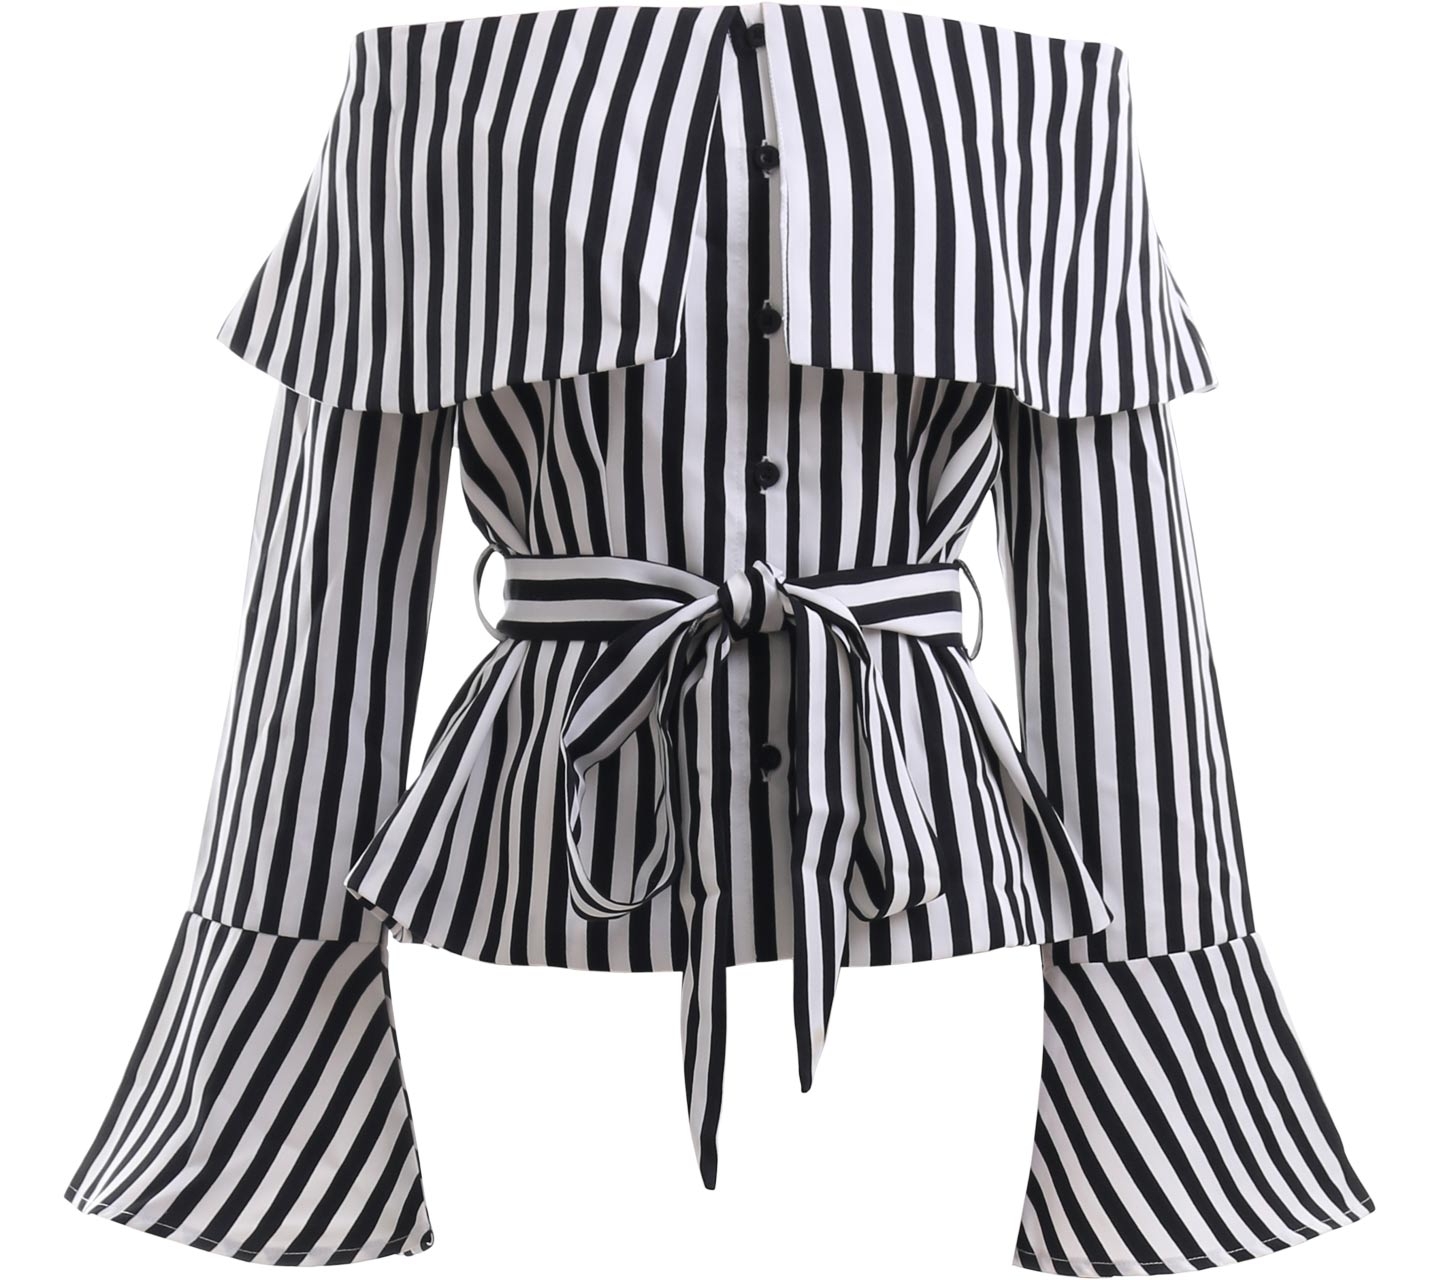 Eloise Black & White Striped Blouse